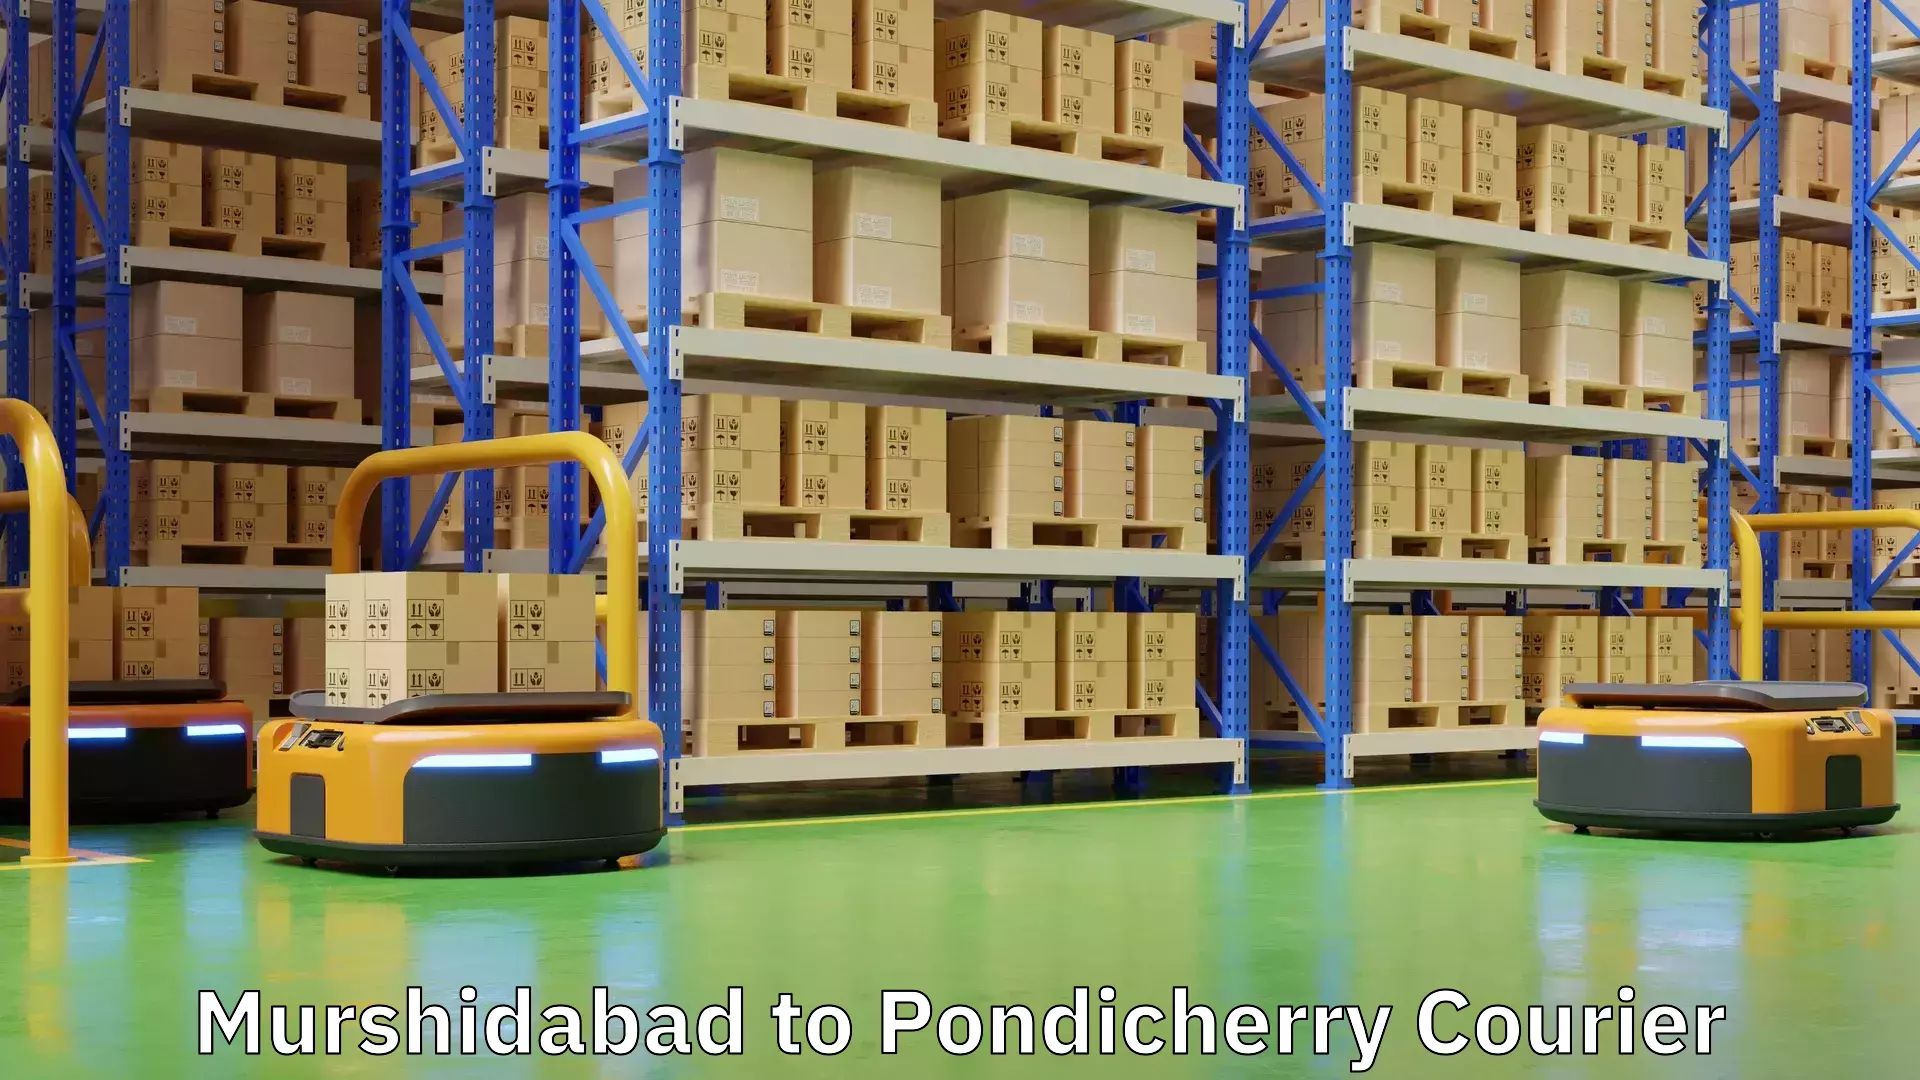 Courier service efficiency in Murshidabad to Pondicherry University